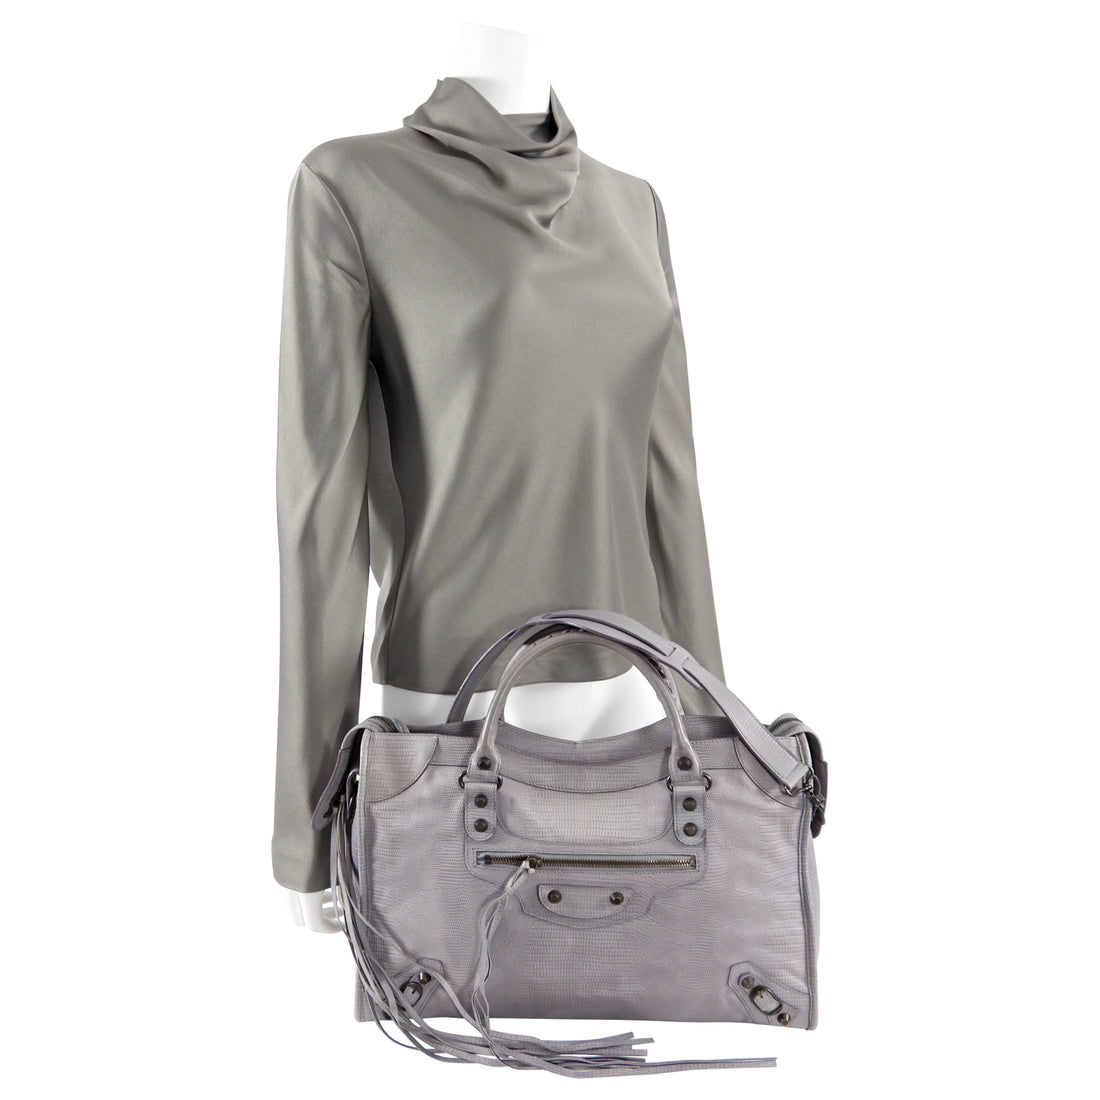 Balenciaga Lilac Limited Anniversary Edition Medium Classic City Bag